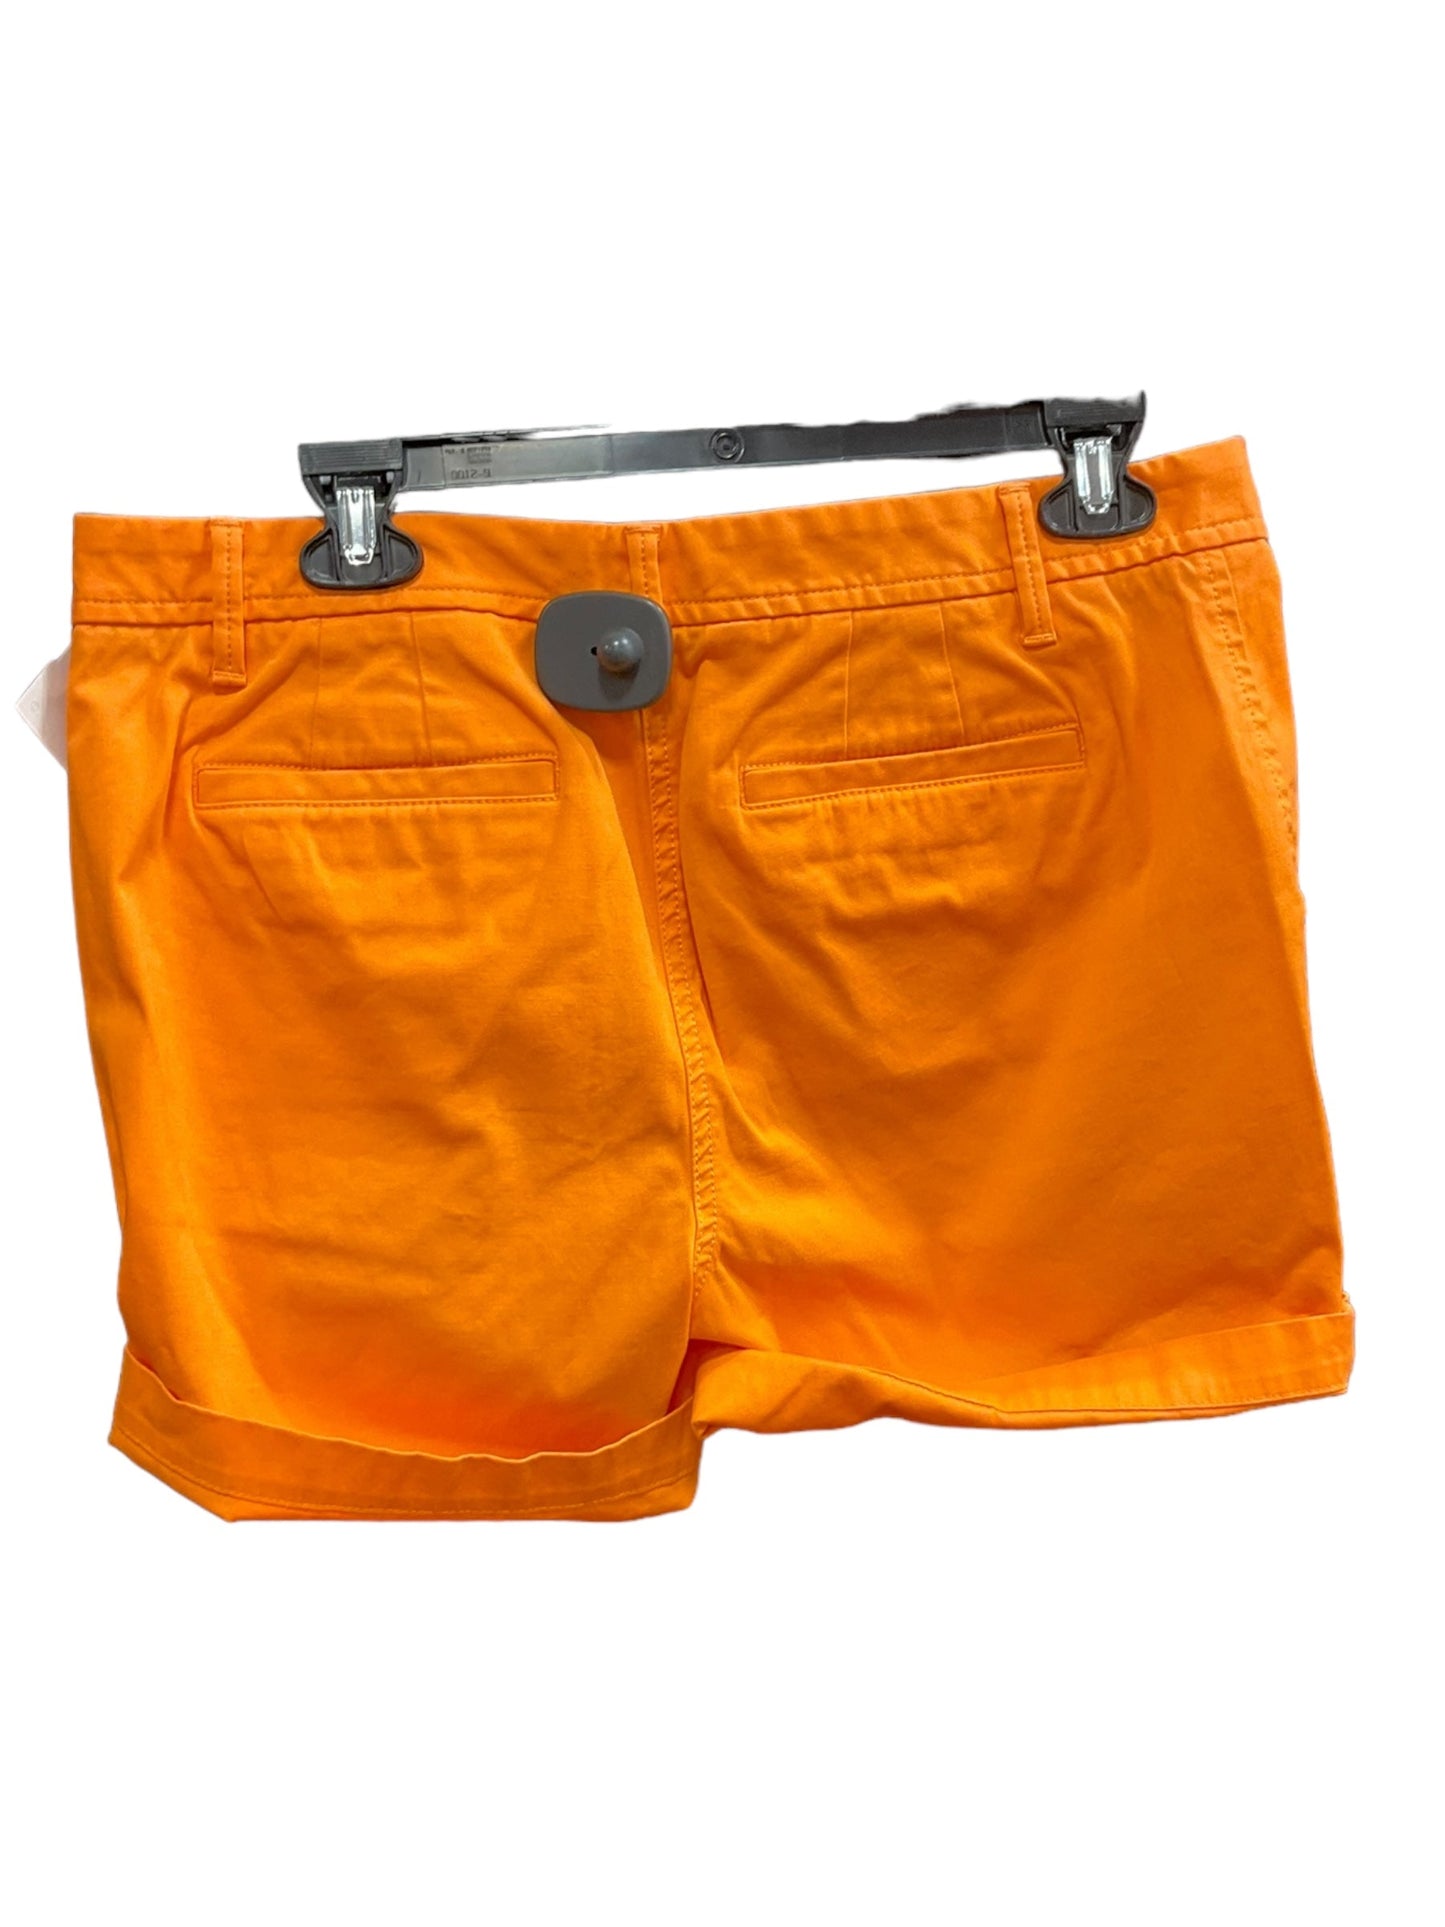 Orange Shorts Talbots, Size M